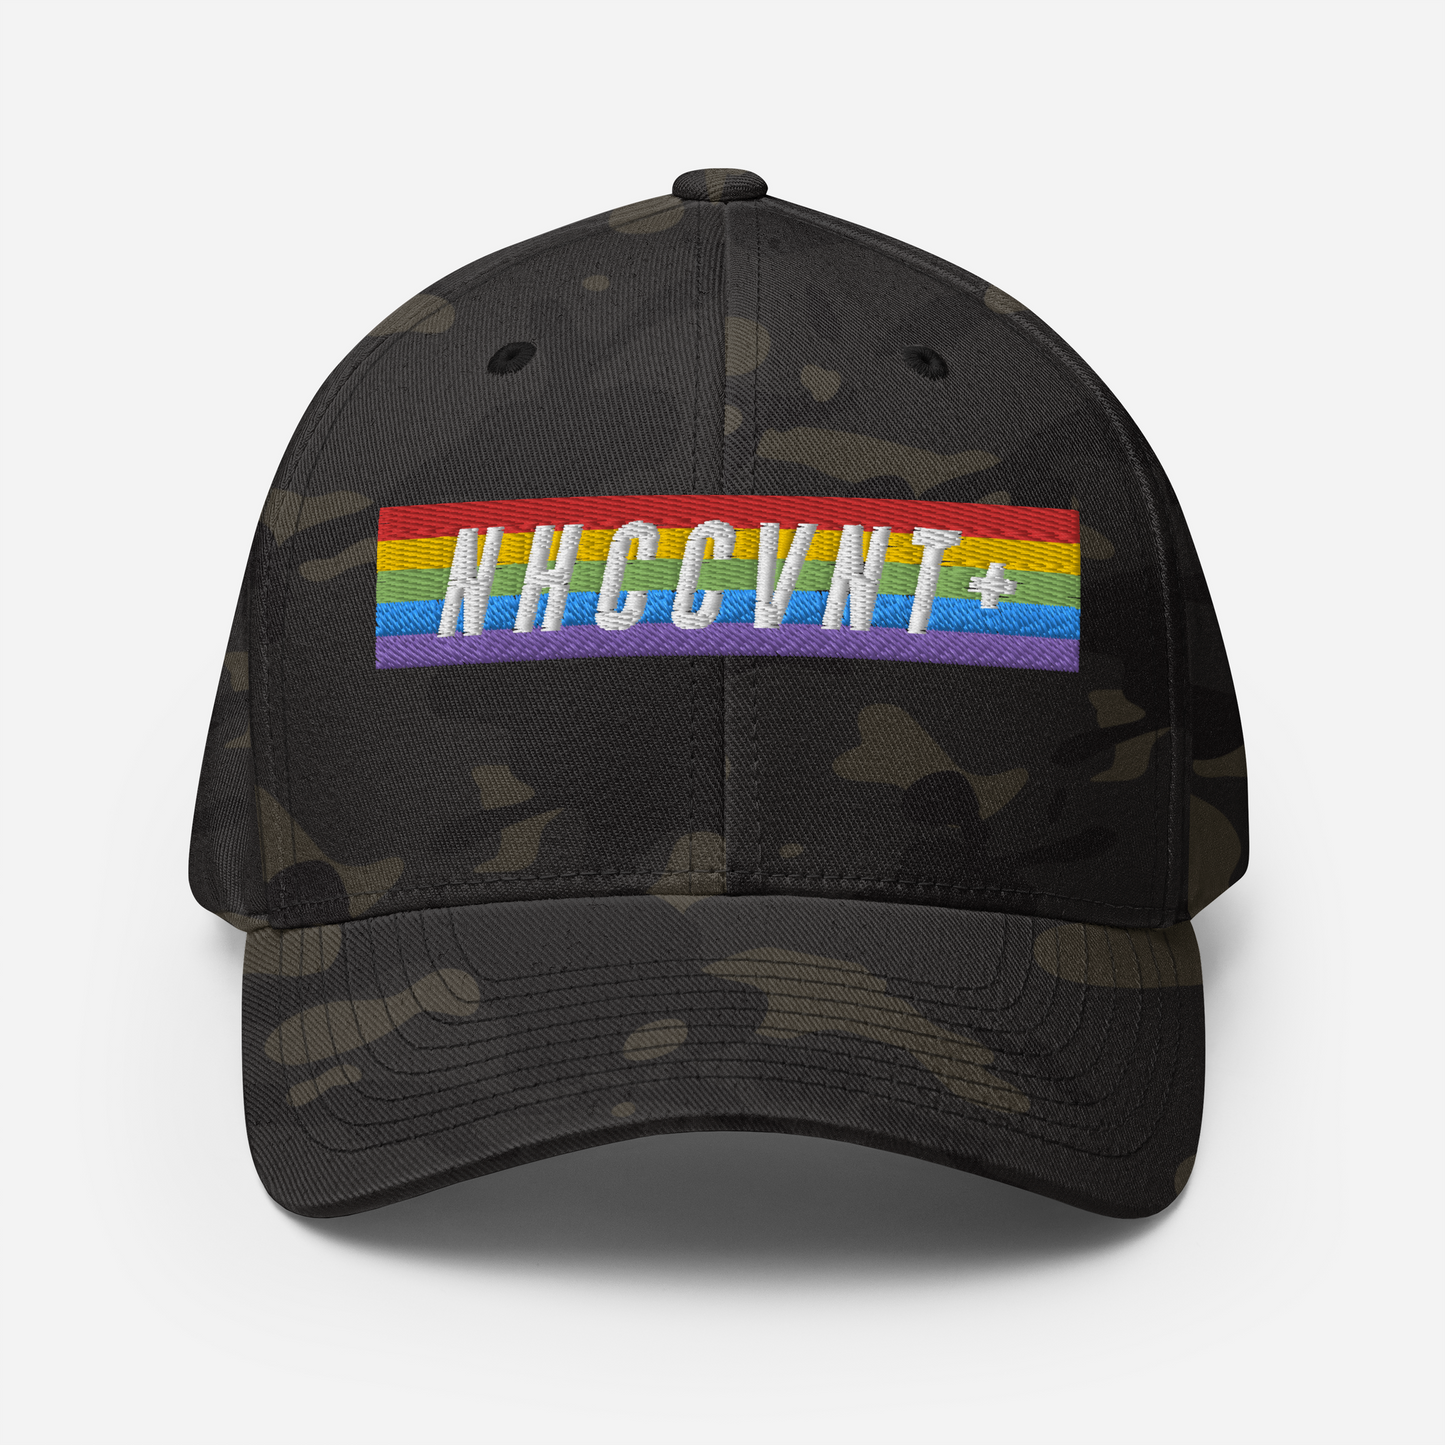 NHCCVNT+ Flexfit Hat